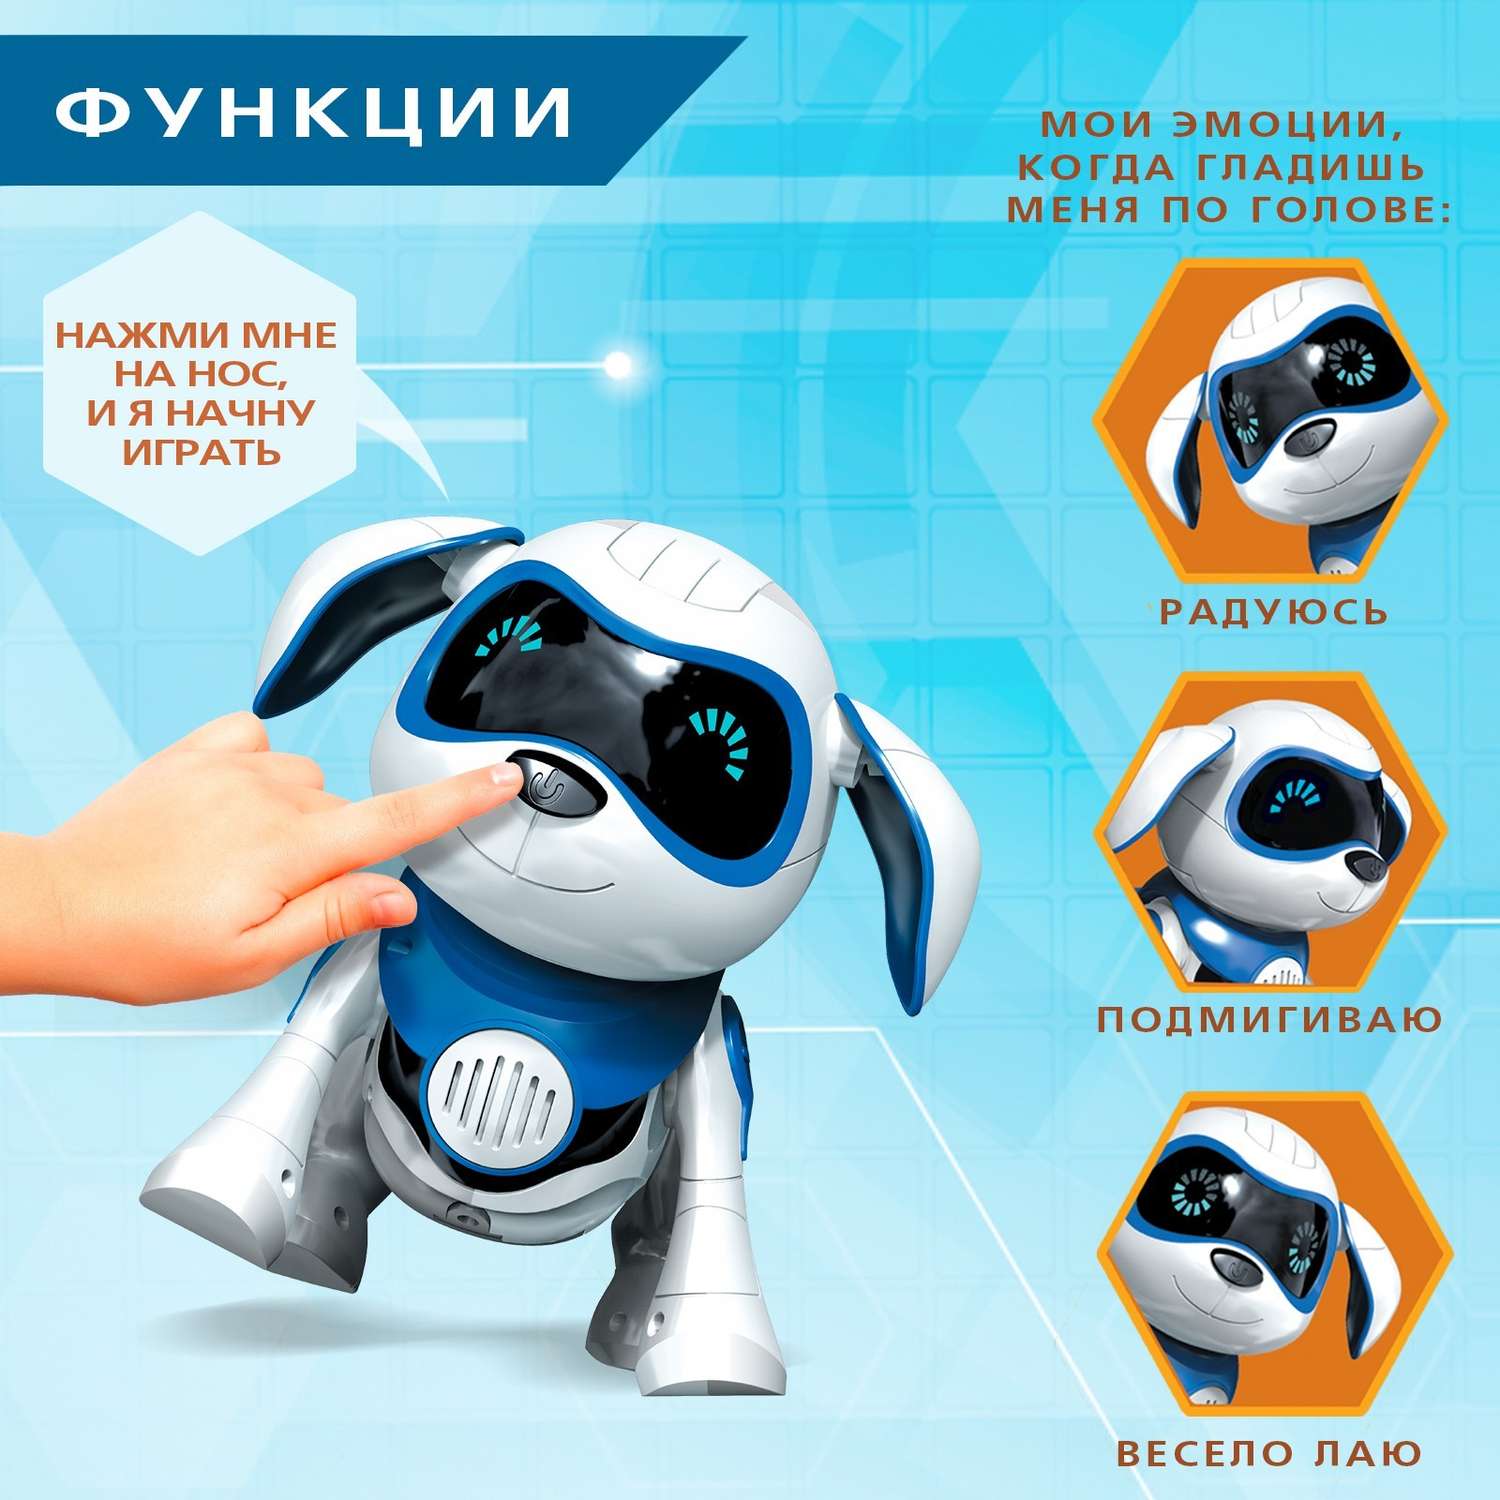 Интерактивная игрушка Zabiaka Робот собака «Чаппи» русское озвучивание цвет синий - фото 2